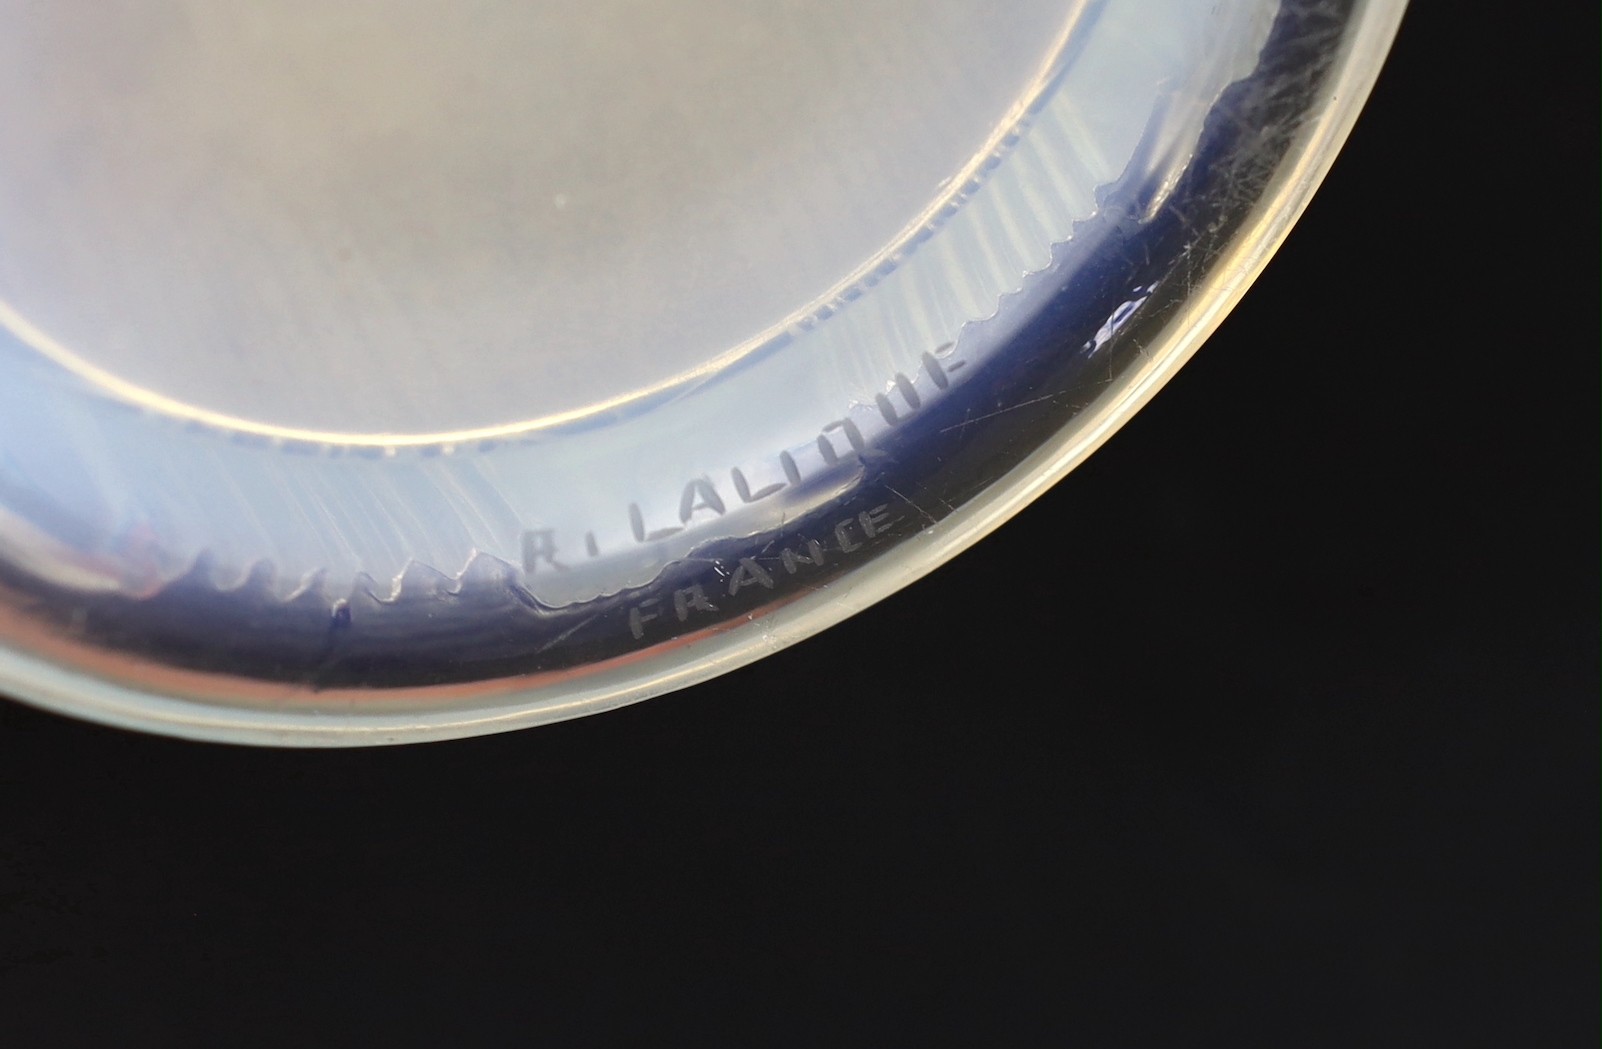 An R. Lalique glass ‘Danaides’ opalescent glass vase, engraved mark ‘R. LALIQUE FRANCE’, Marcilhac No. 972, 18cm high